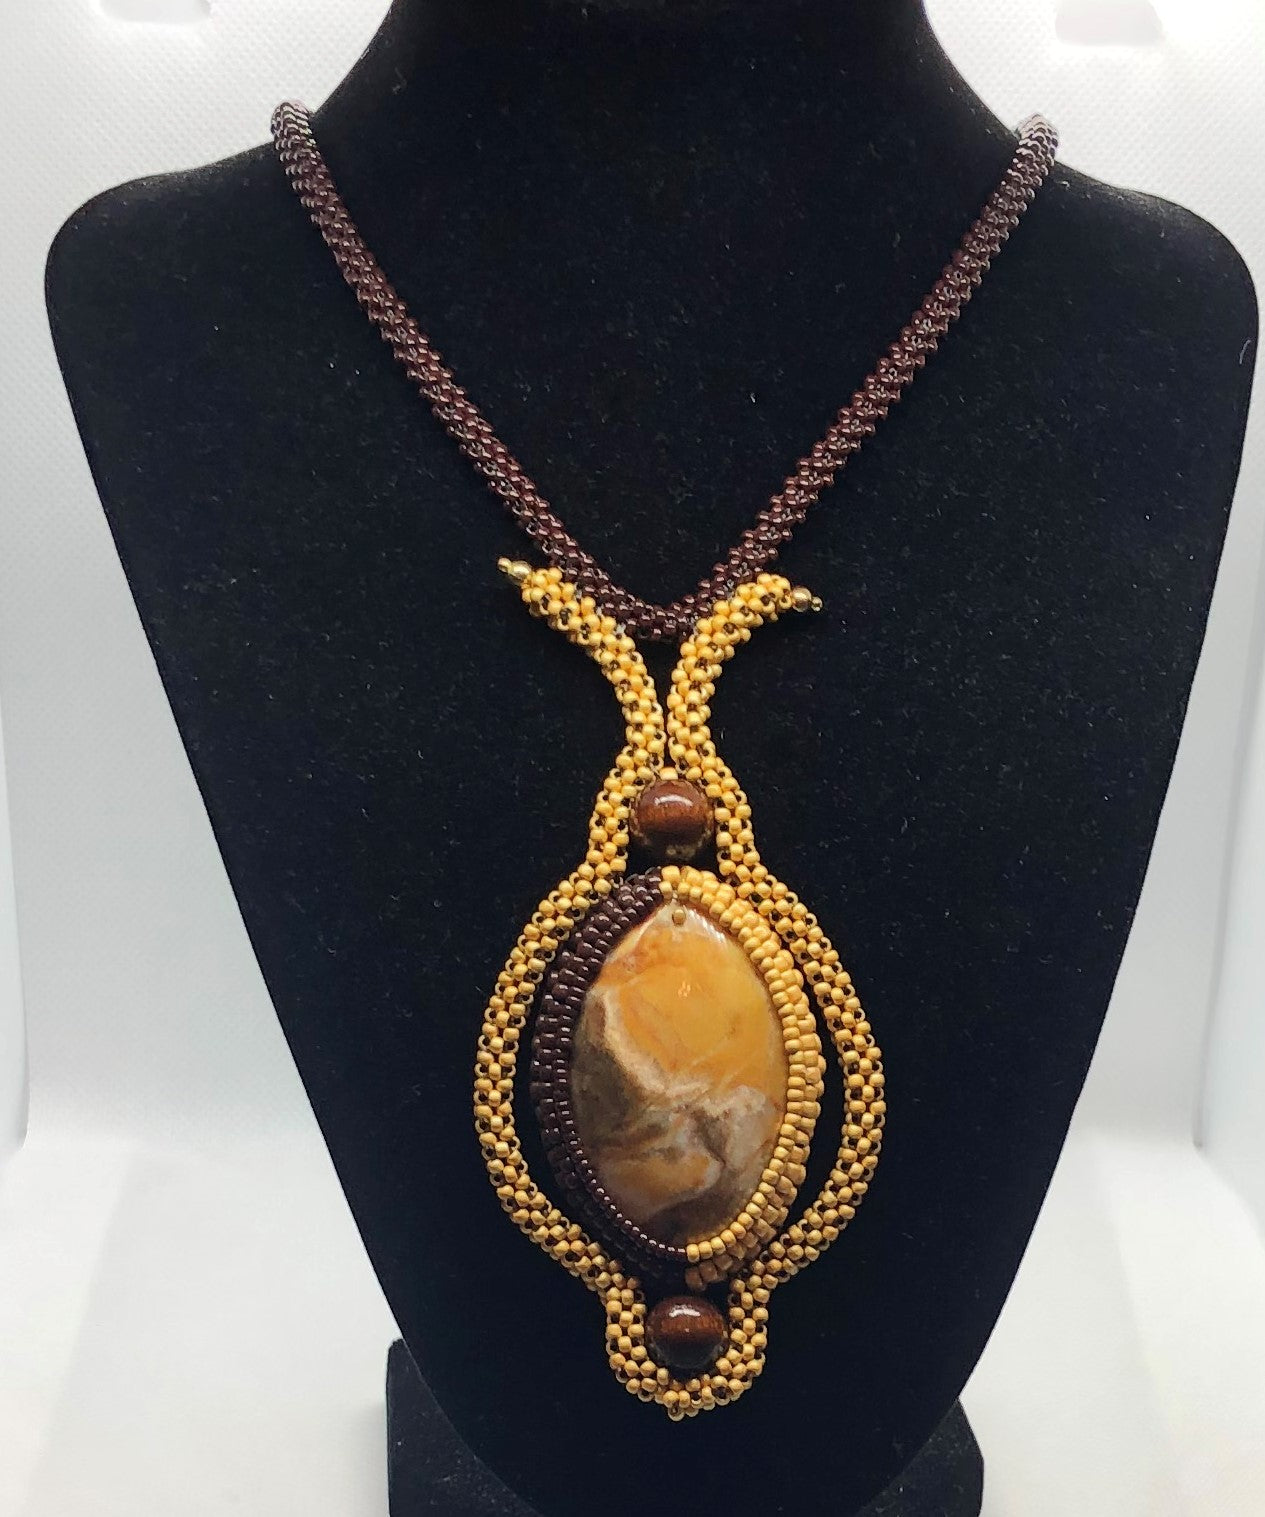 Encapsulated Pendant Necklace